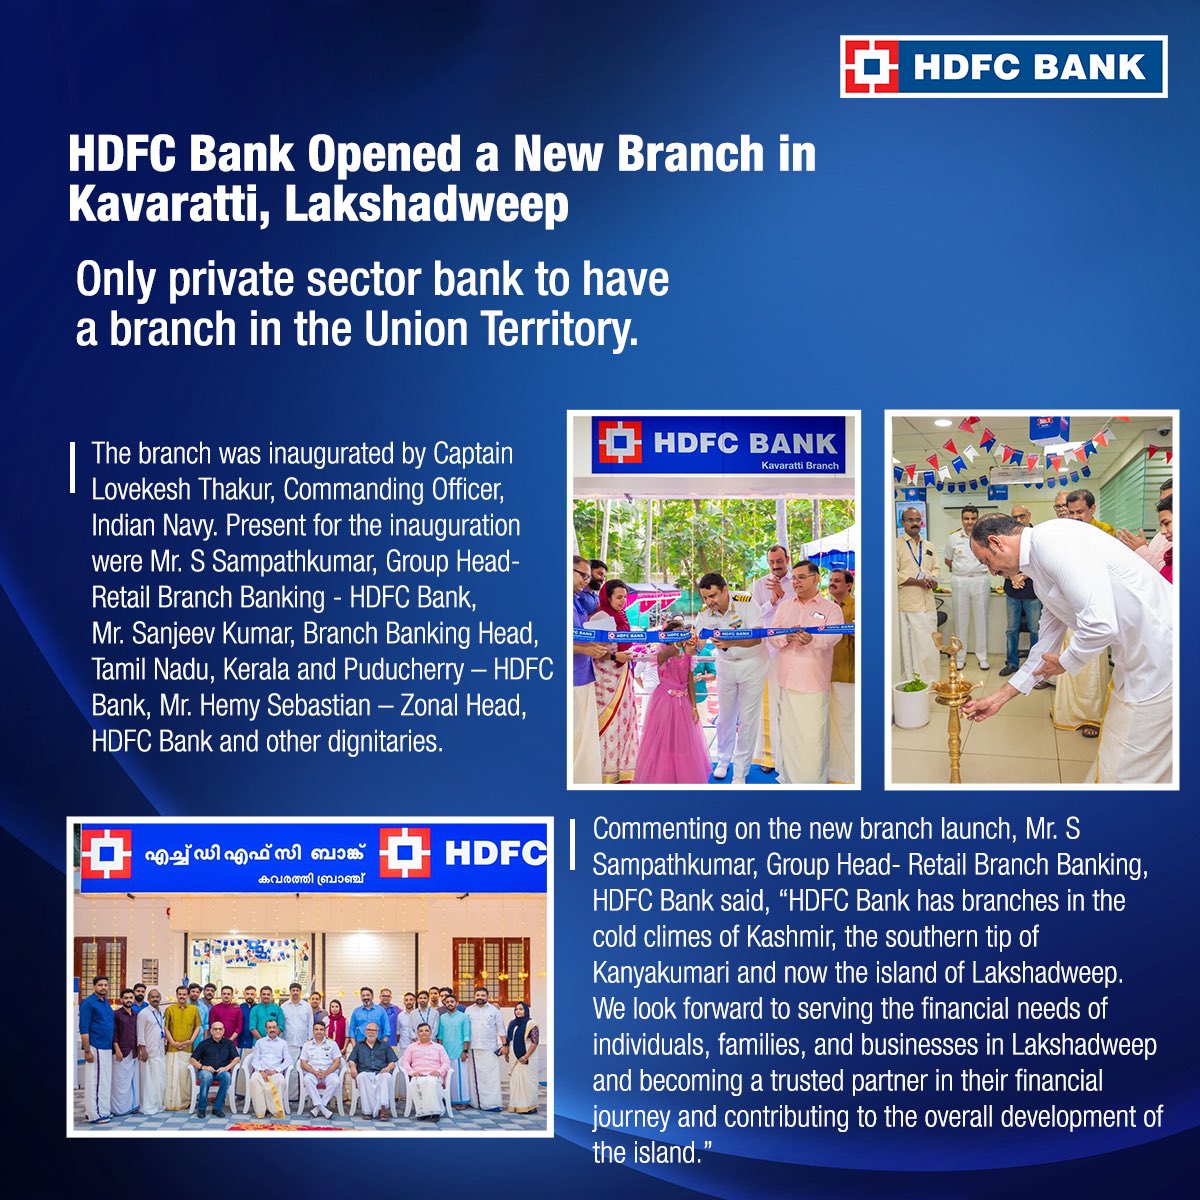 HDFC Bank Opens Branch in Kavaratti, Lakshadweep Read below to know more: #HDFCBank #News #NewBranch #Lakshadweep